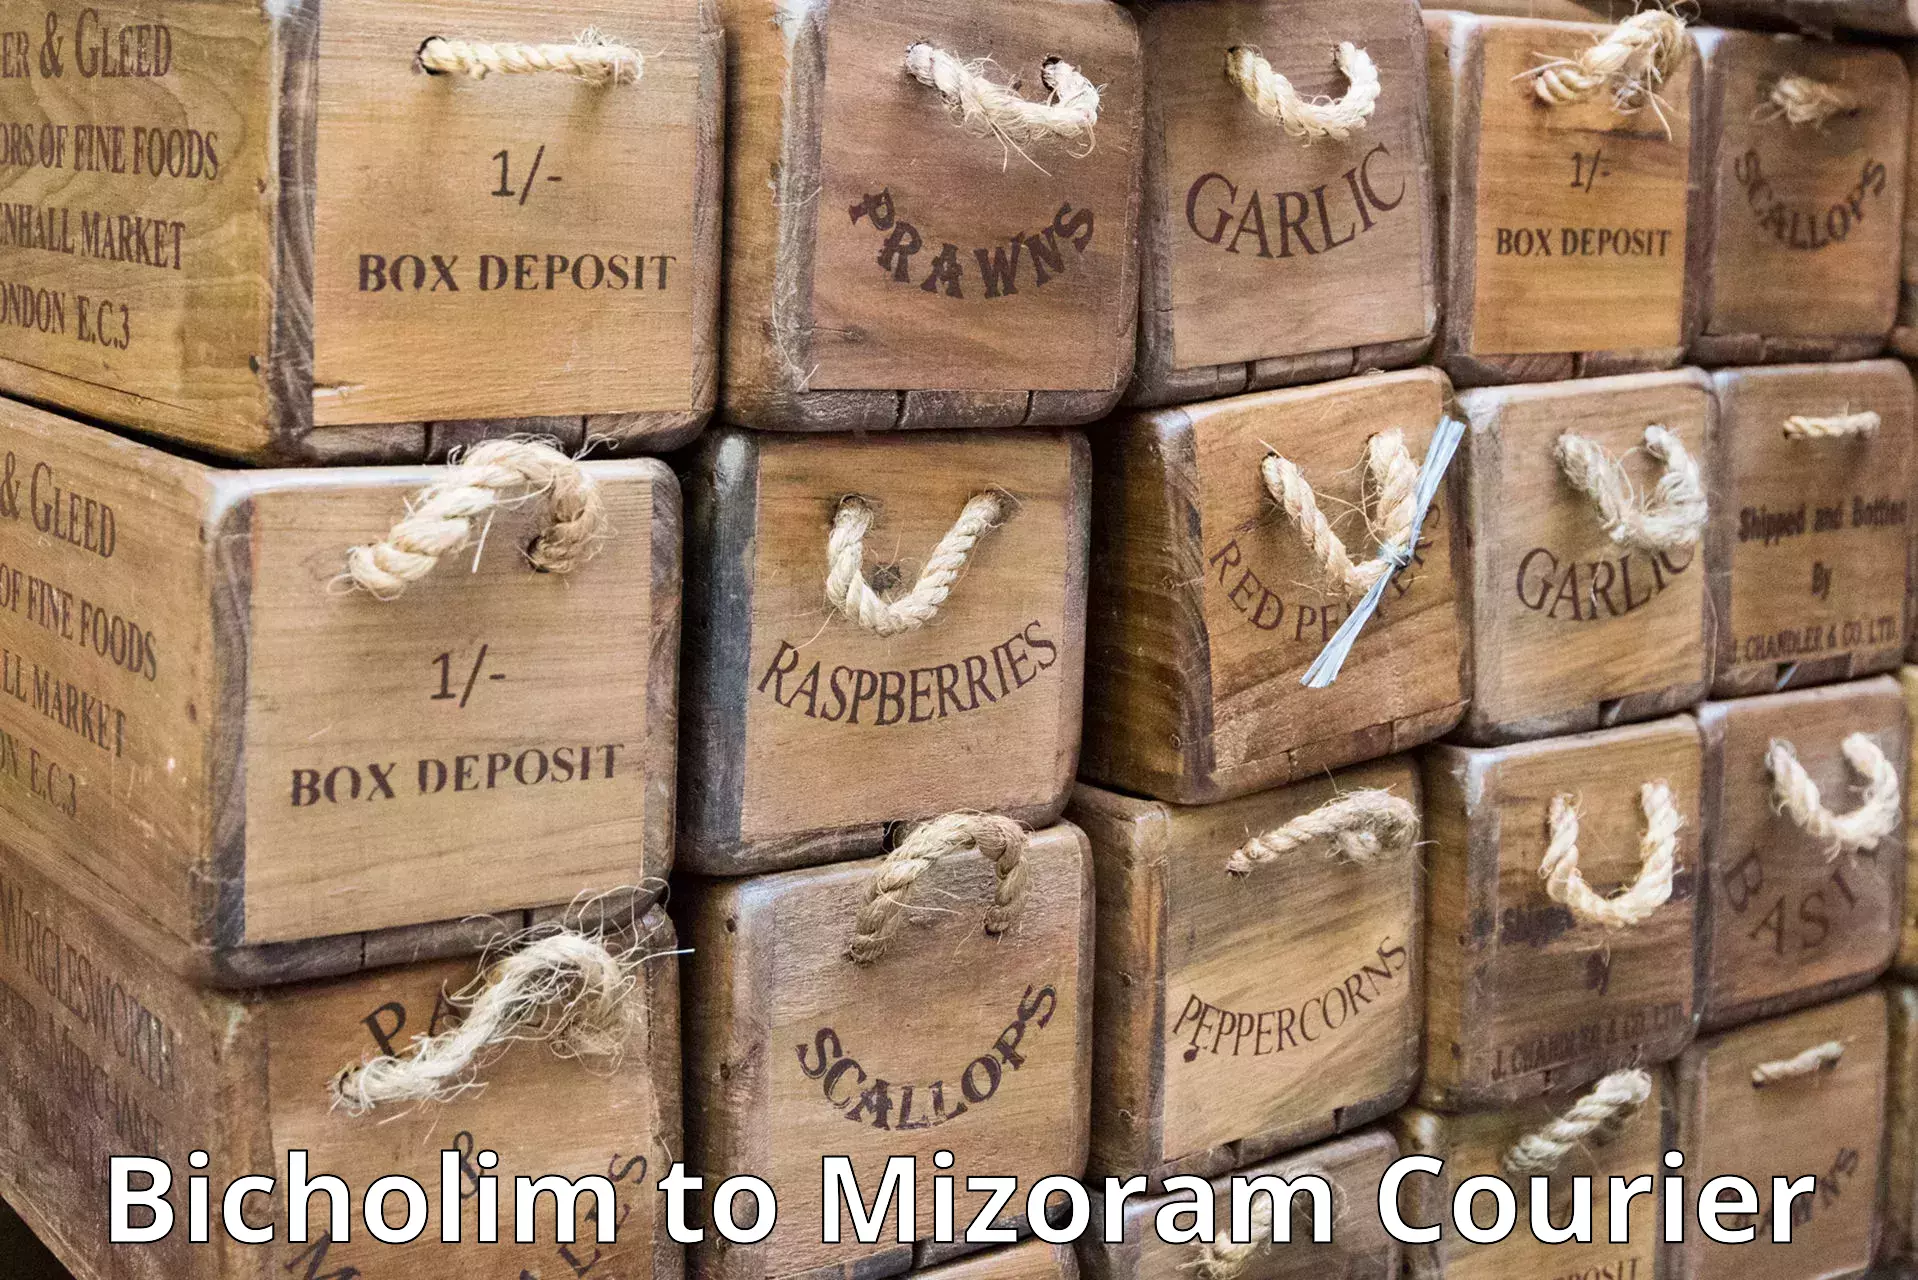 Express delivery capabilities Bicholim to Mizoram